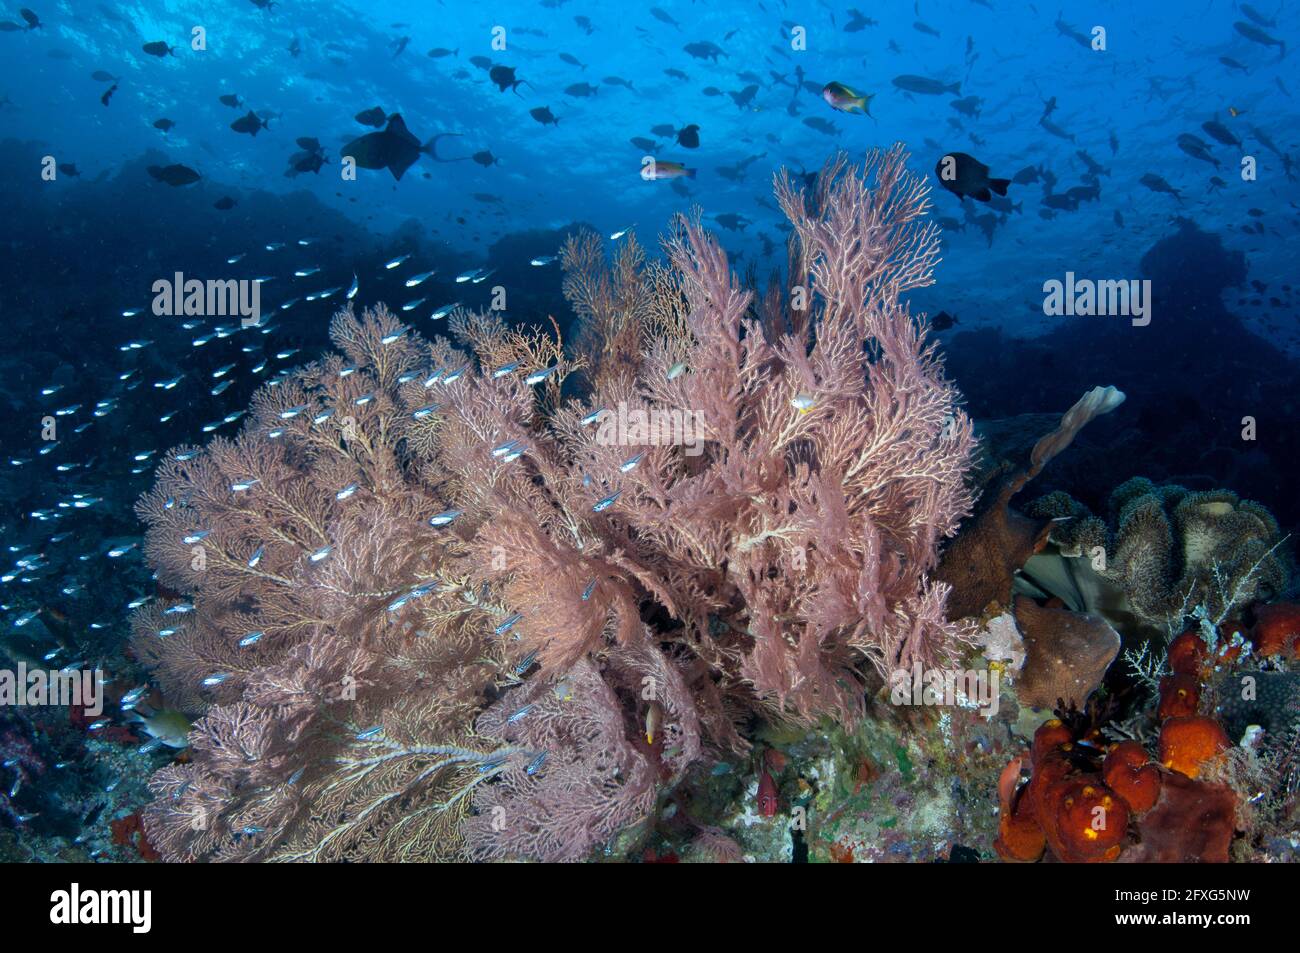 Coral fan and fish on reef, Cape Kri dive site, Dampier Strait, Raja Ampat, West Papua, Indonesia Stock Photo